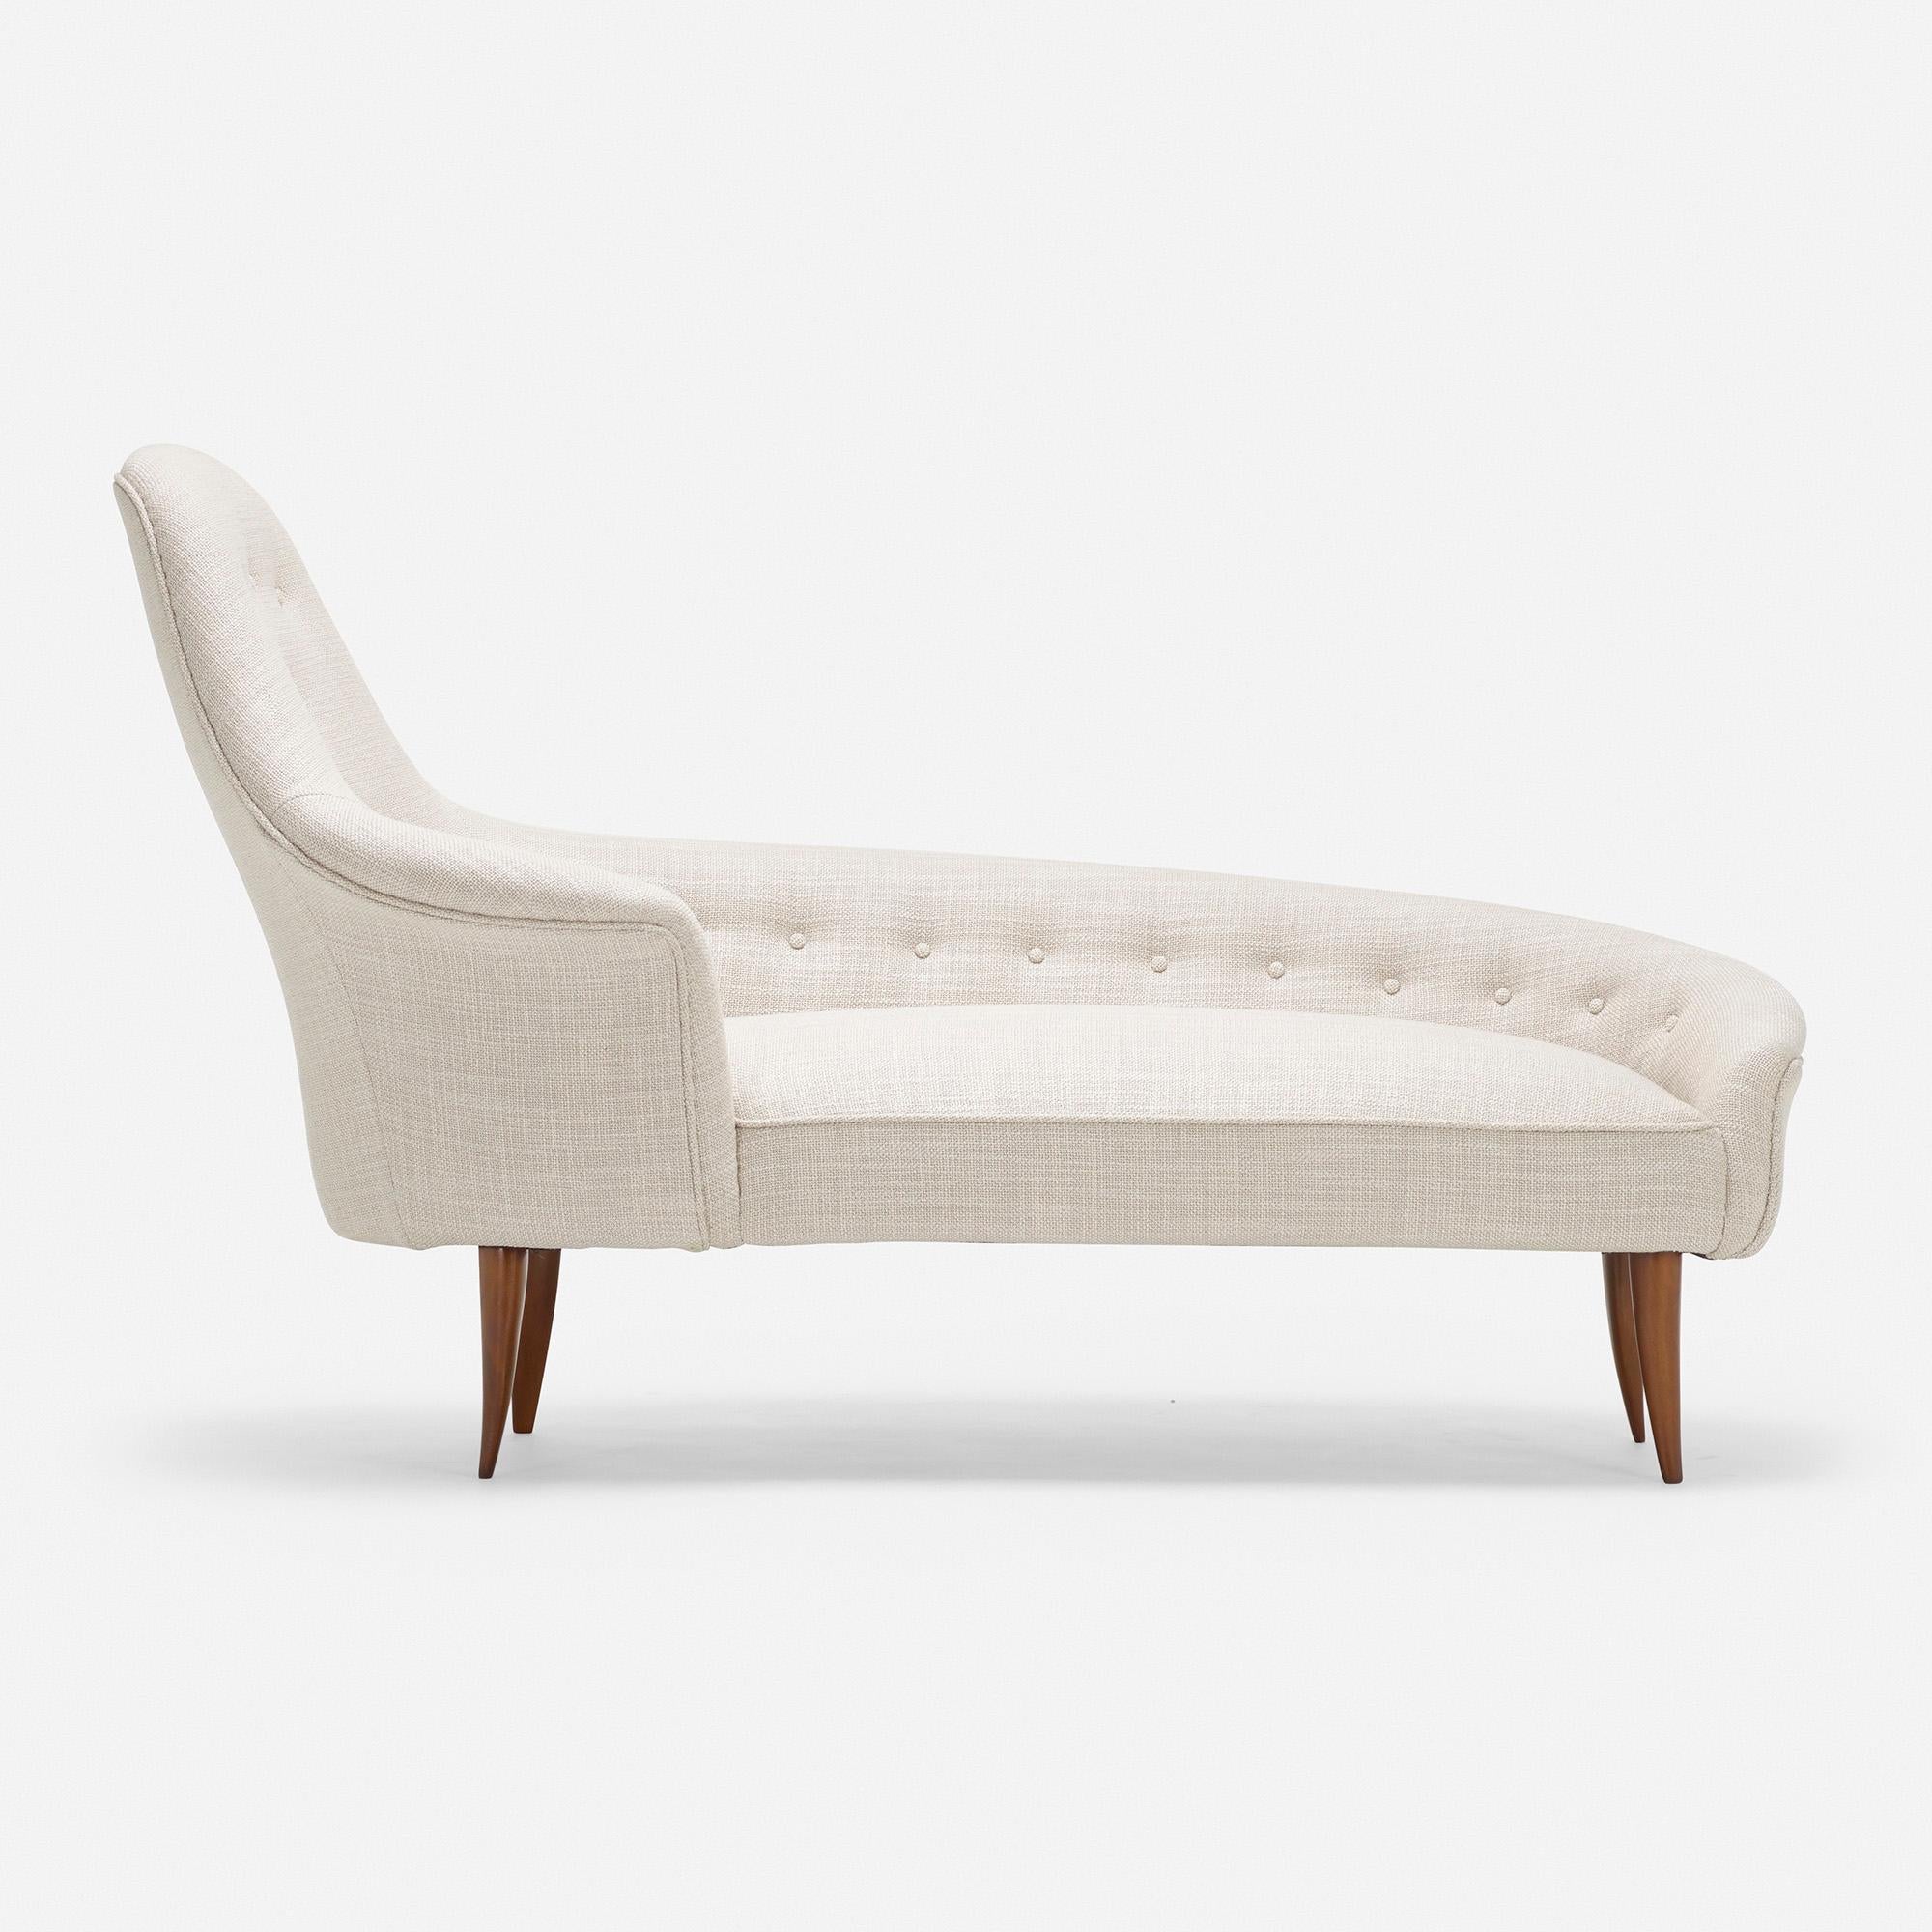 Made by: Nordiska Kompaniets Verkstäder, Sweden.

Material: upholstery, beech.

Size: 67 W × 30 D × 38.5 H in seat height 15 inches.